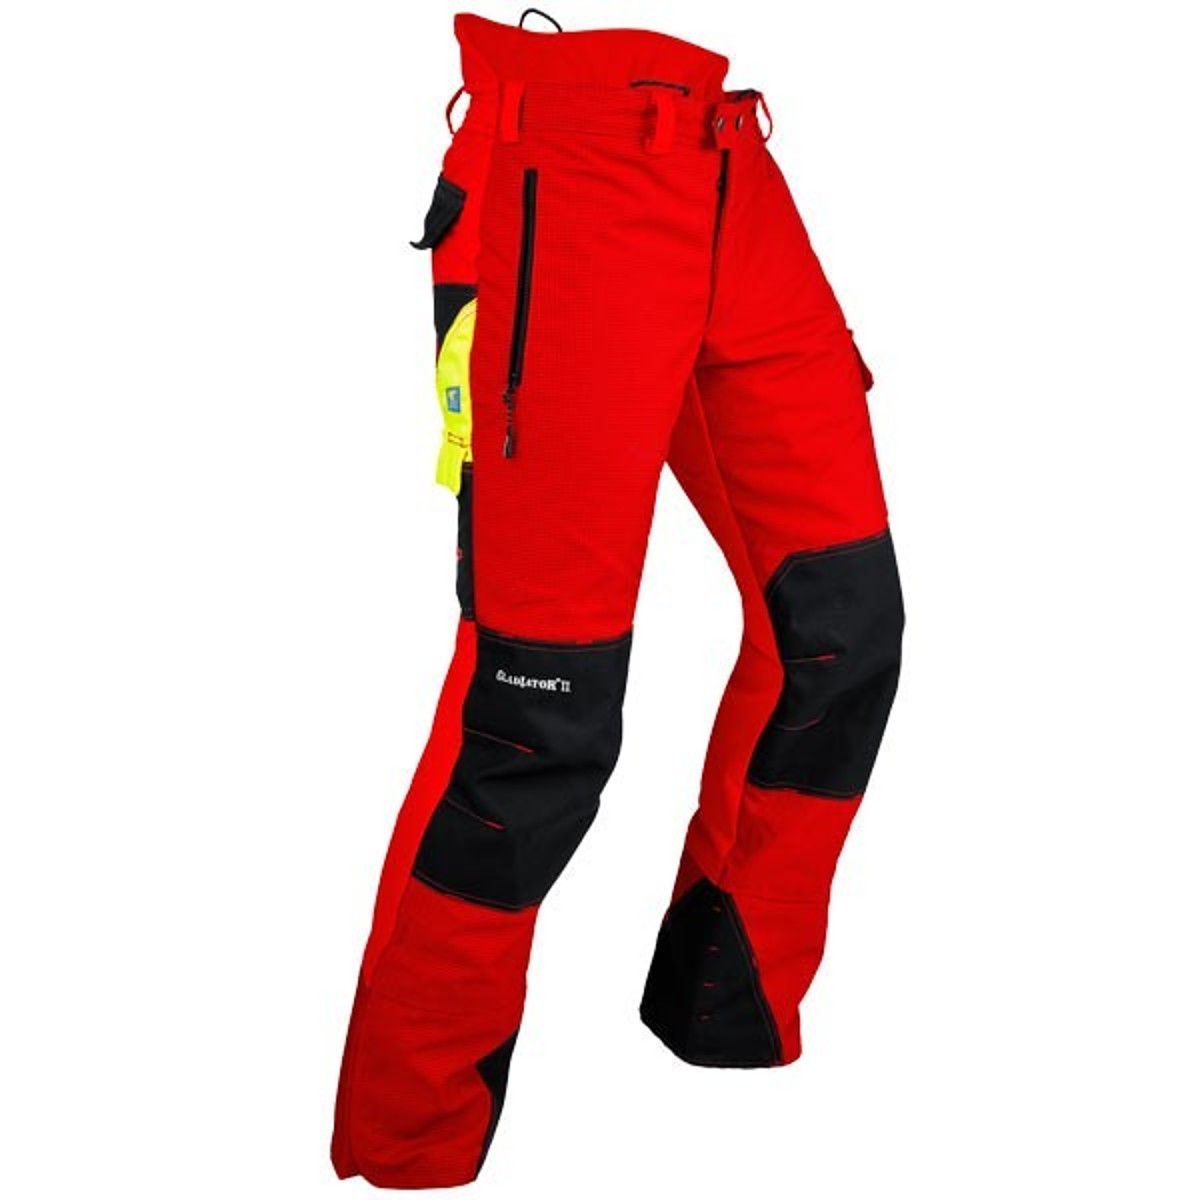 Pfanner Gladiator® II saw protection pants